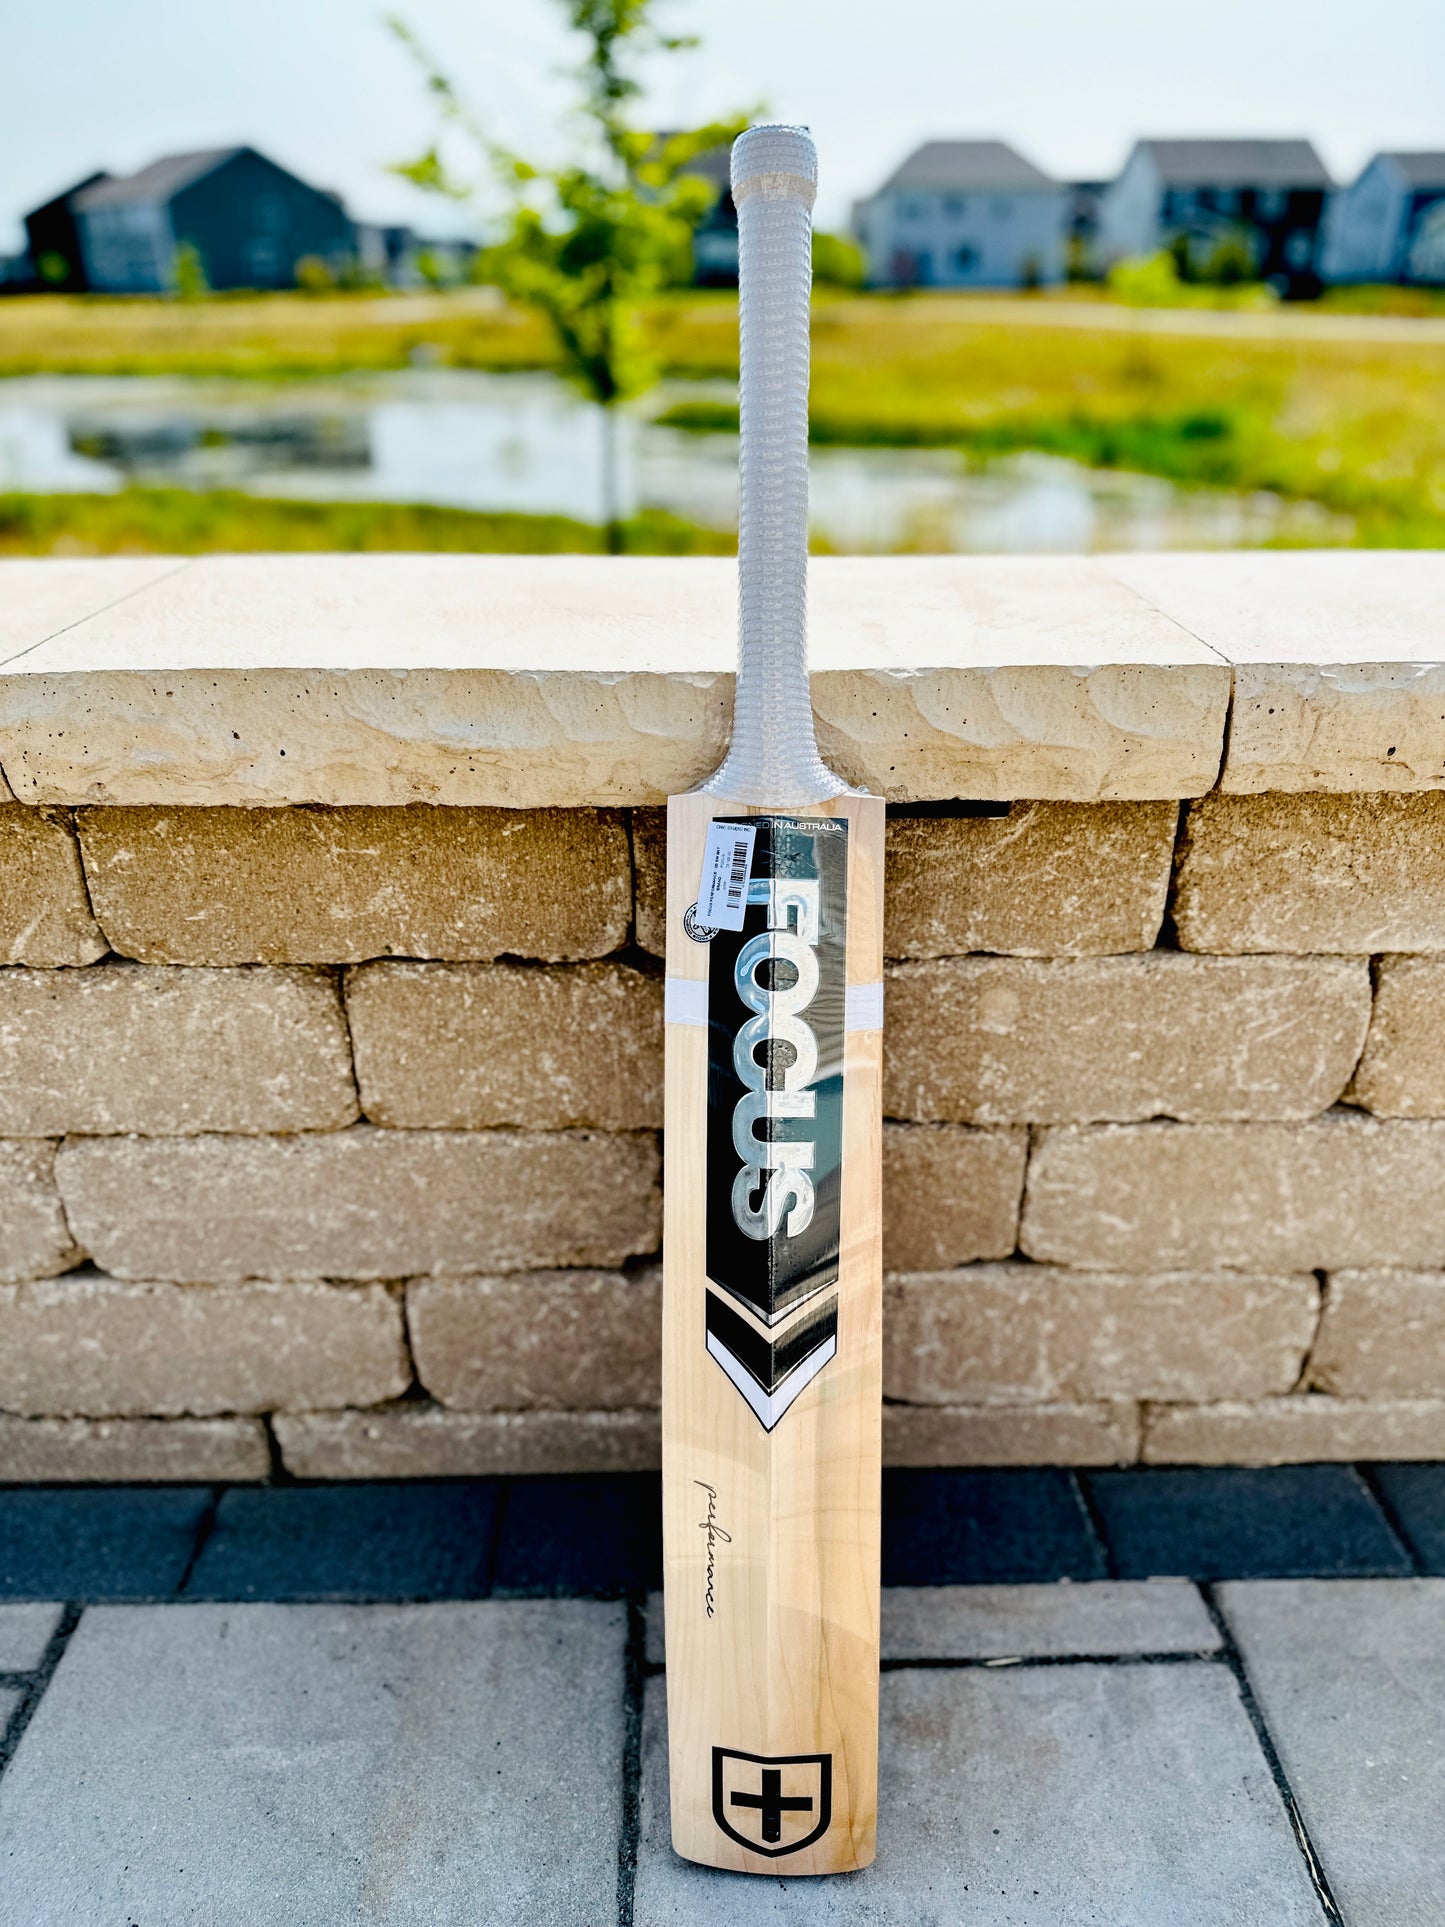 Focus Evo Performance Cricket Bat